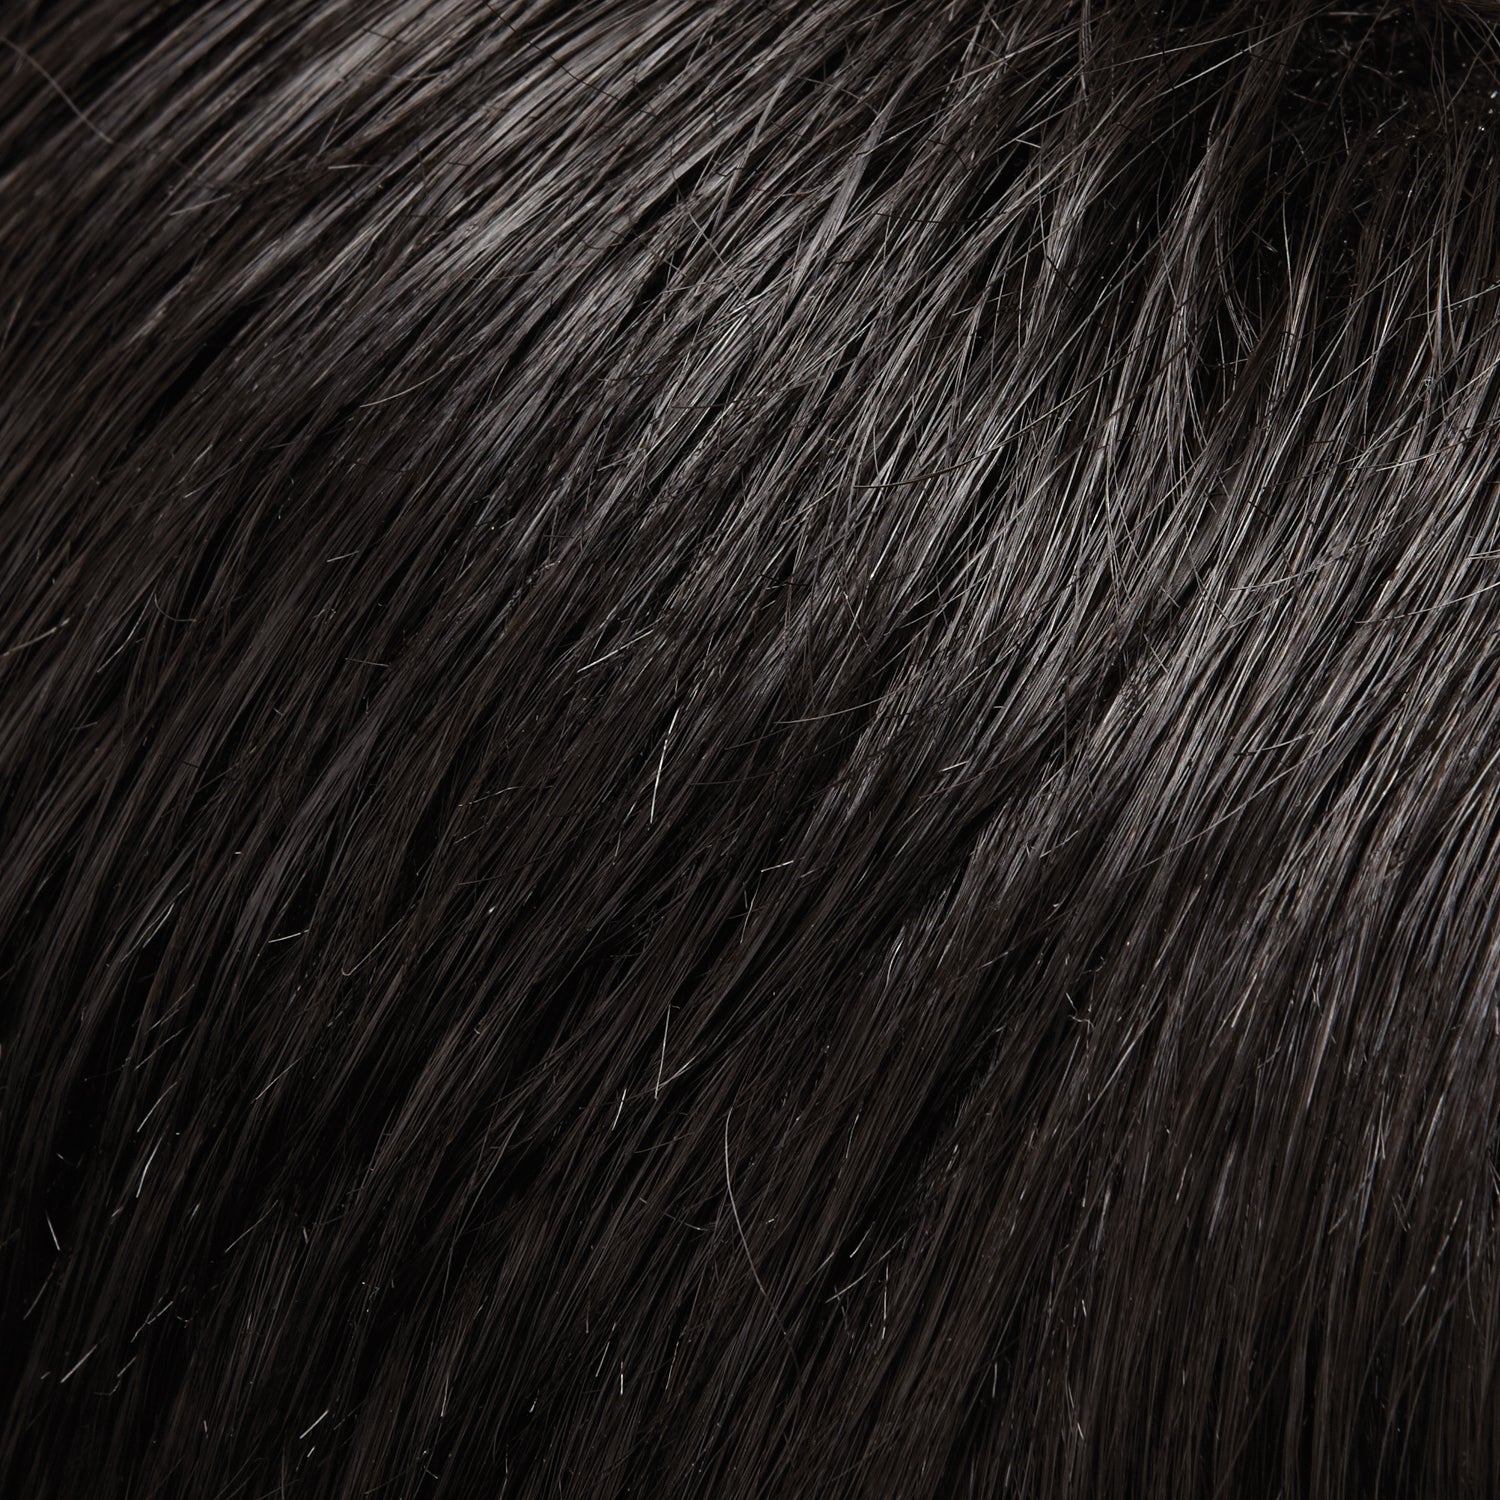 Zara Petite wig - Jon Renau SmartLace Collection